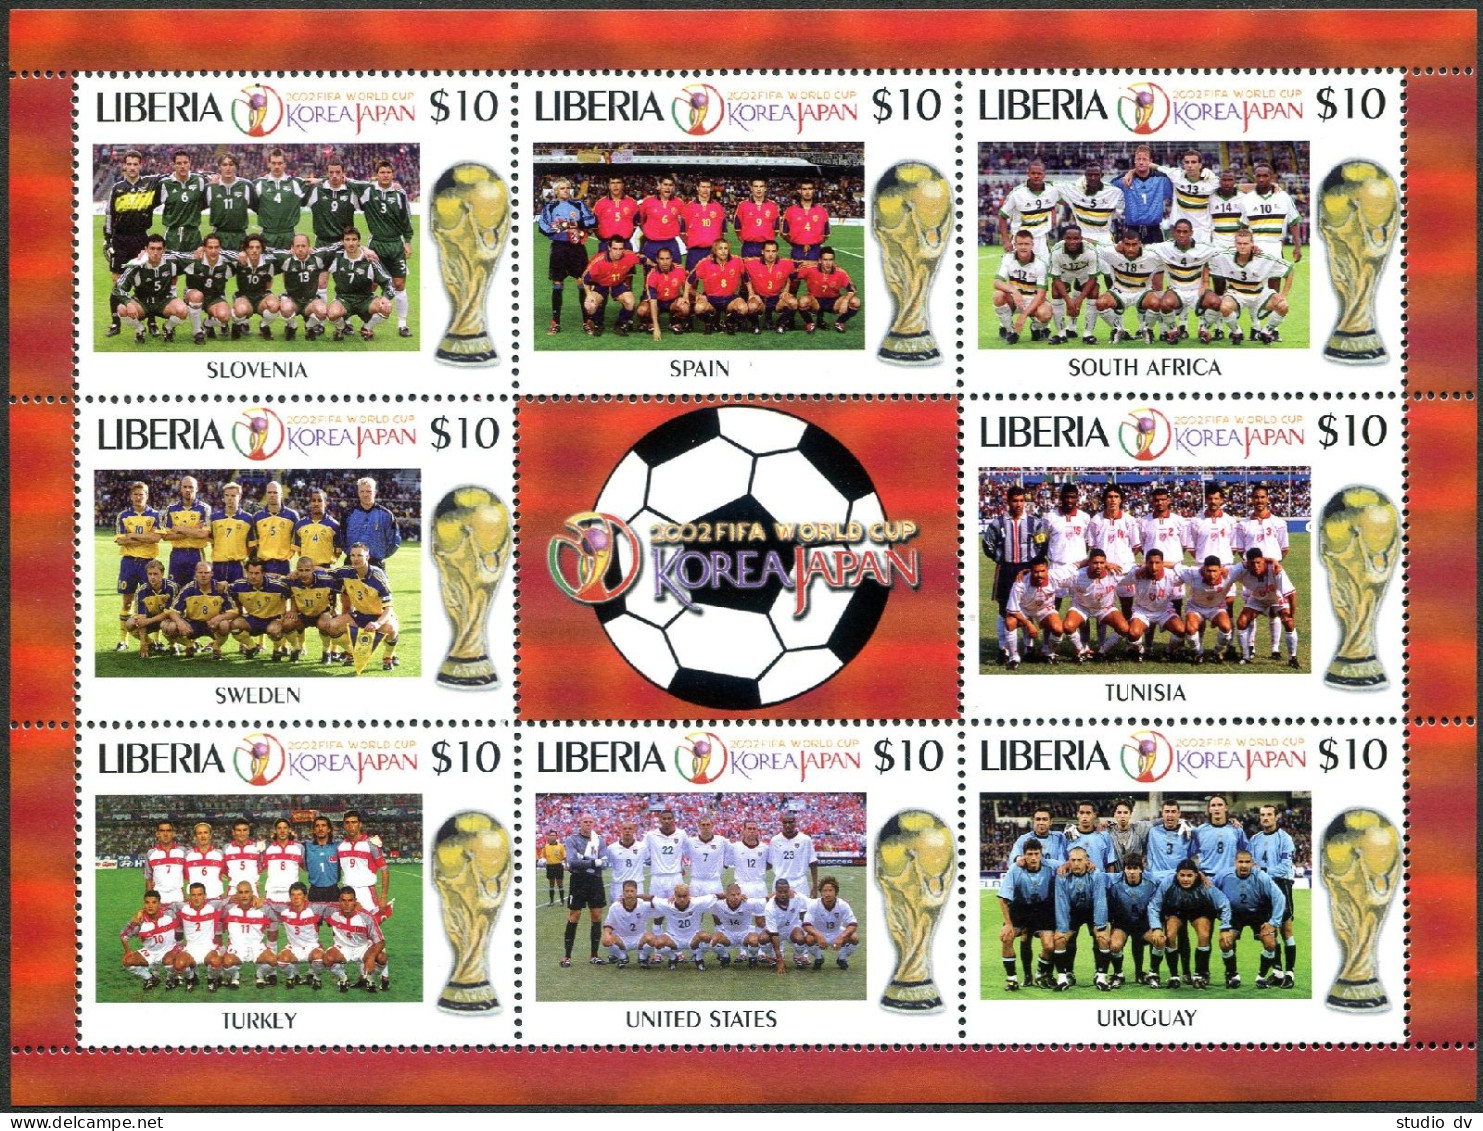 Liberia 2002 World Soccer Cup Japan-Korea Sheet Of 8/label, MNH. - Liberia